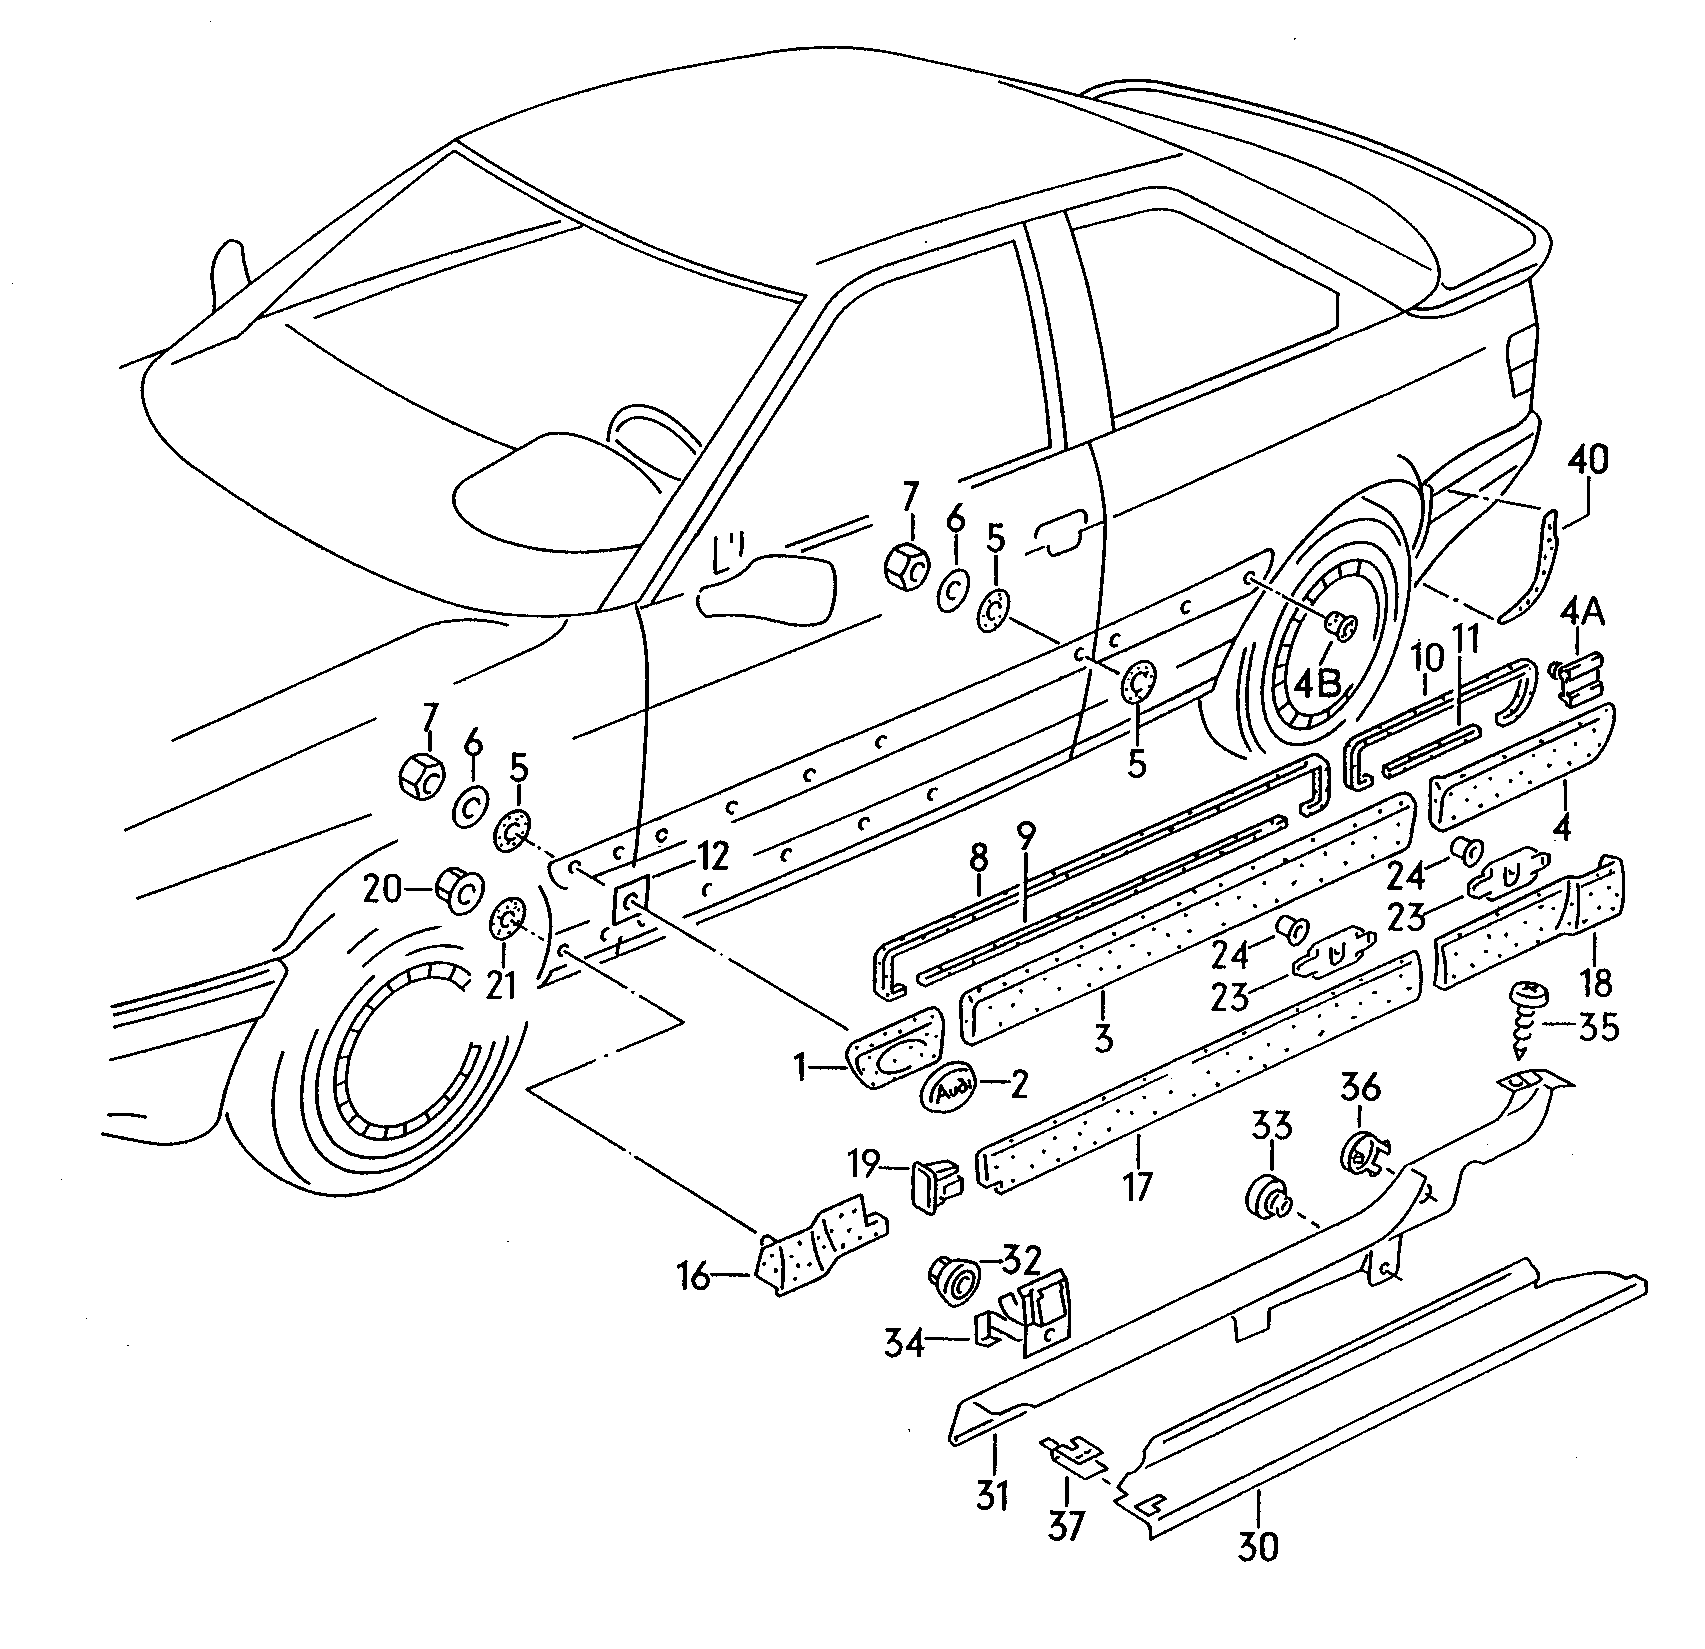 7635  - Audi Cabriolet - aca